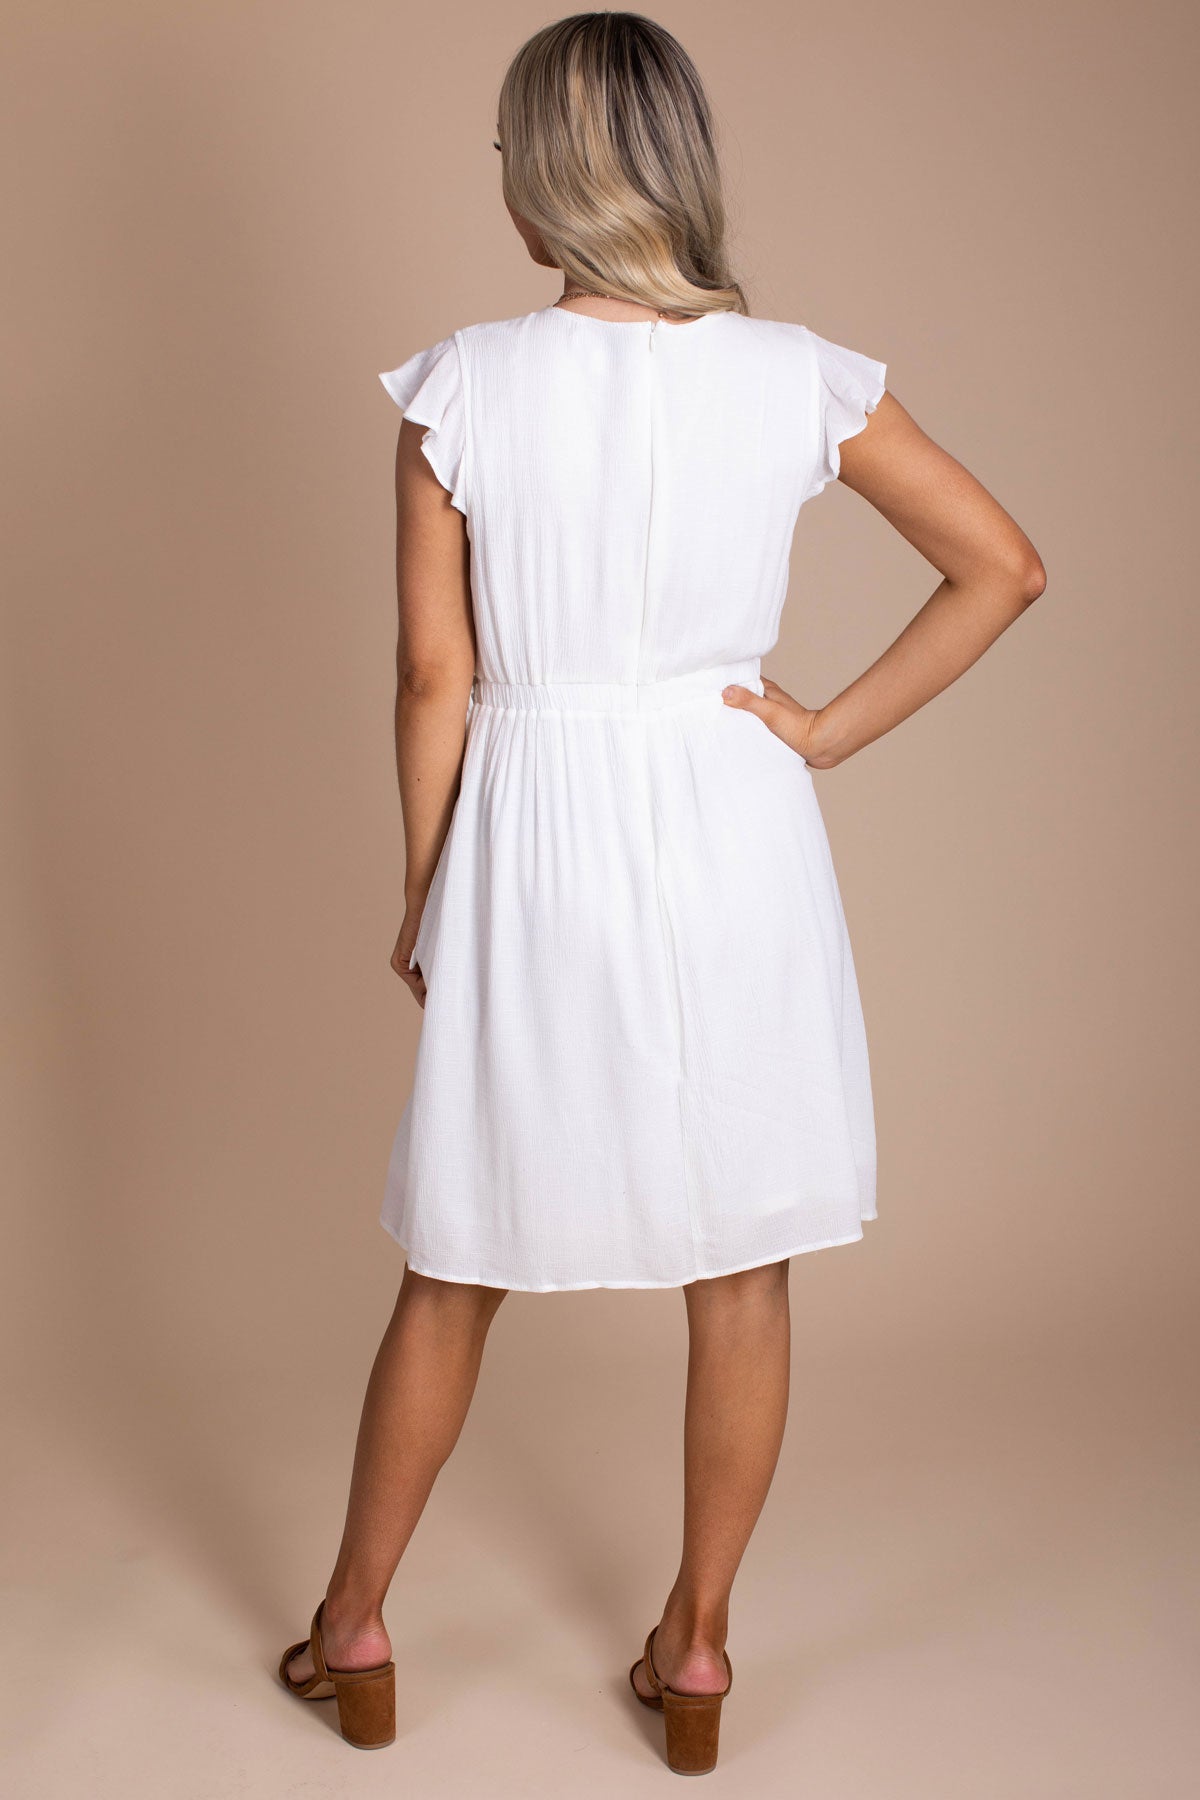 Just My Type Knee-Length Dress - White